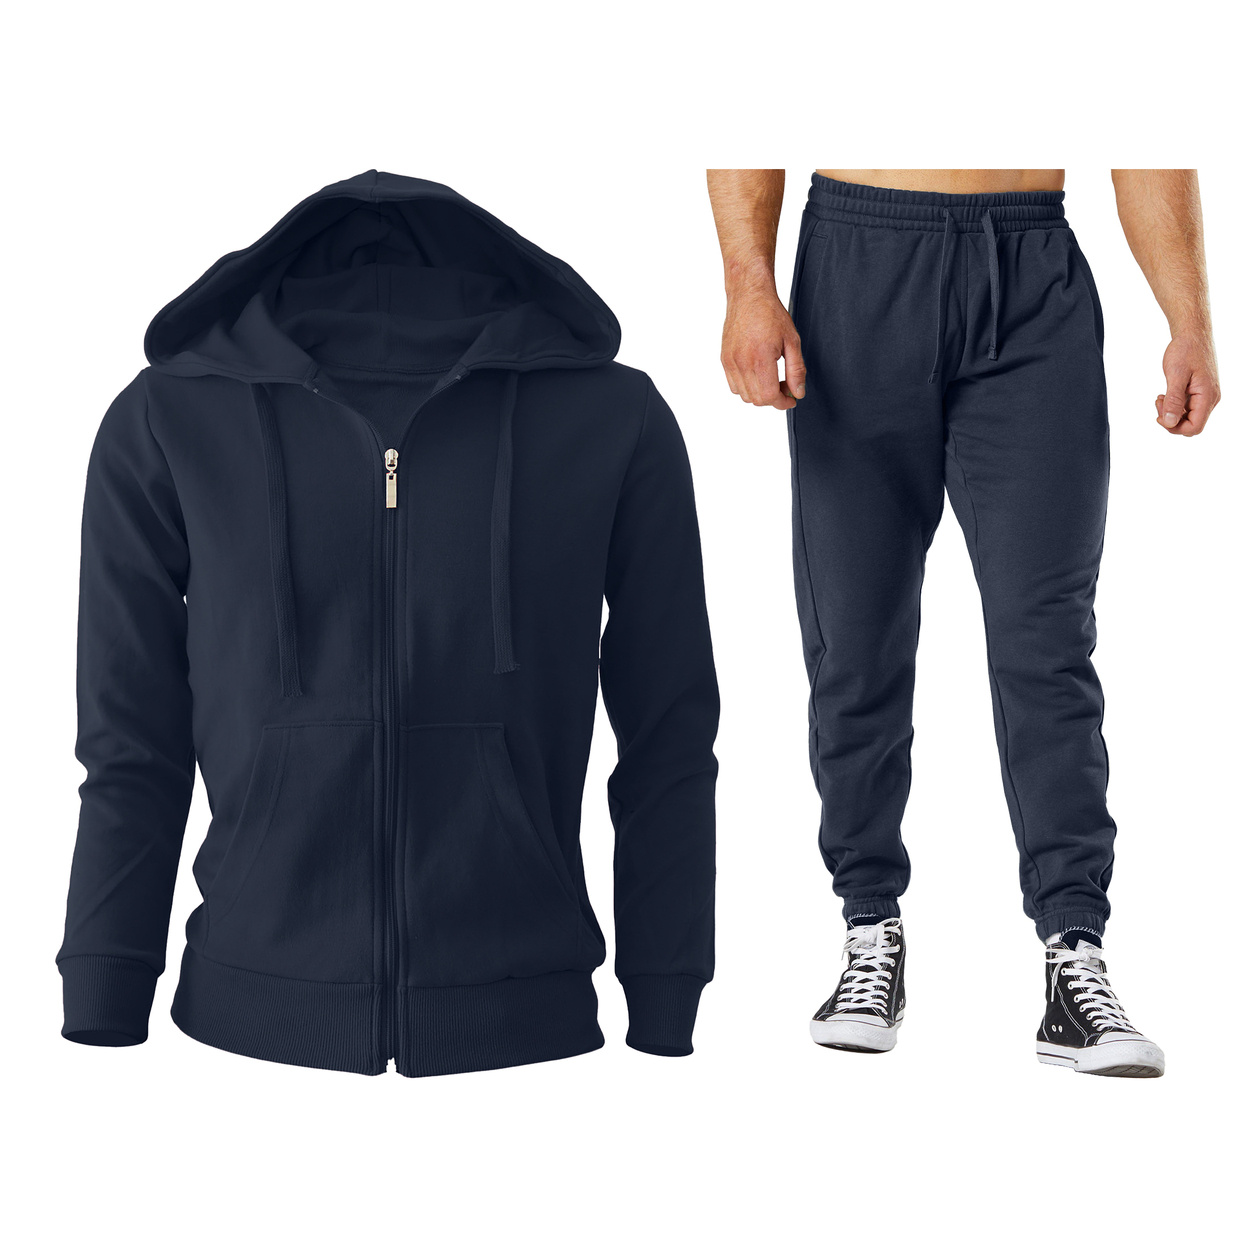 2-Piece: Men's Winter Warm Cozy Athletic Multi-Pockets BIG & TALL Sweatsuit Set - Charcoal, Xx-large